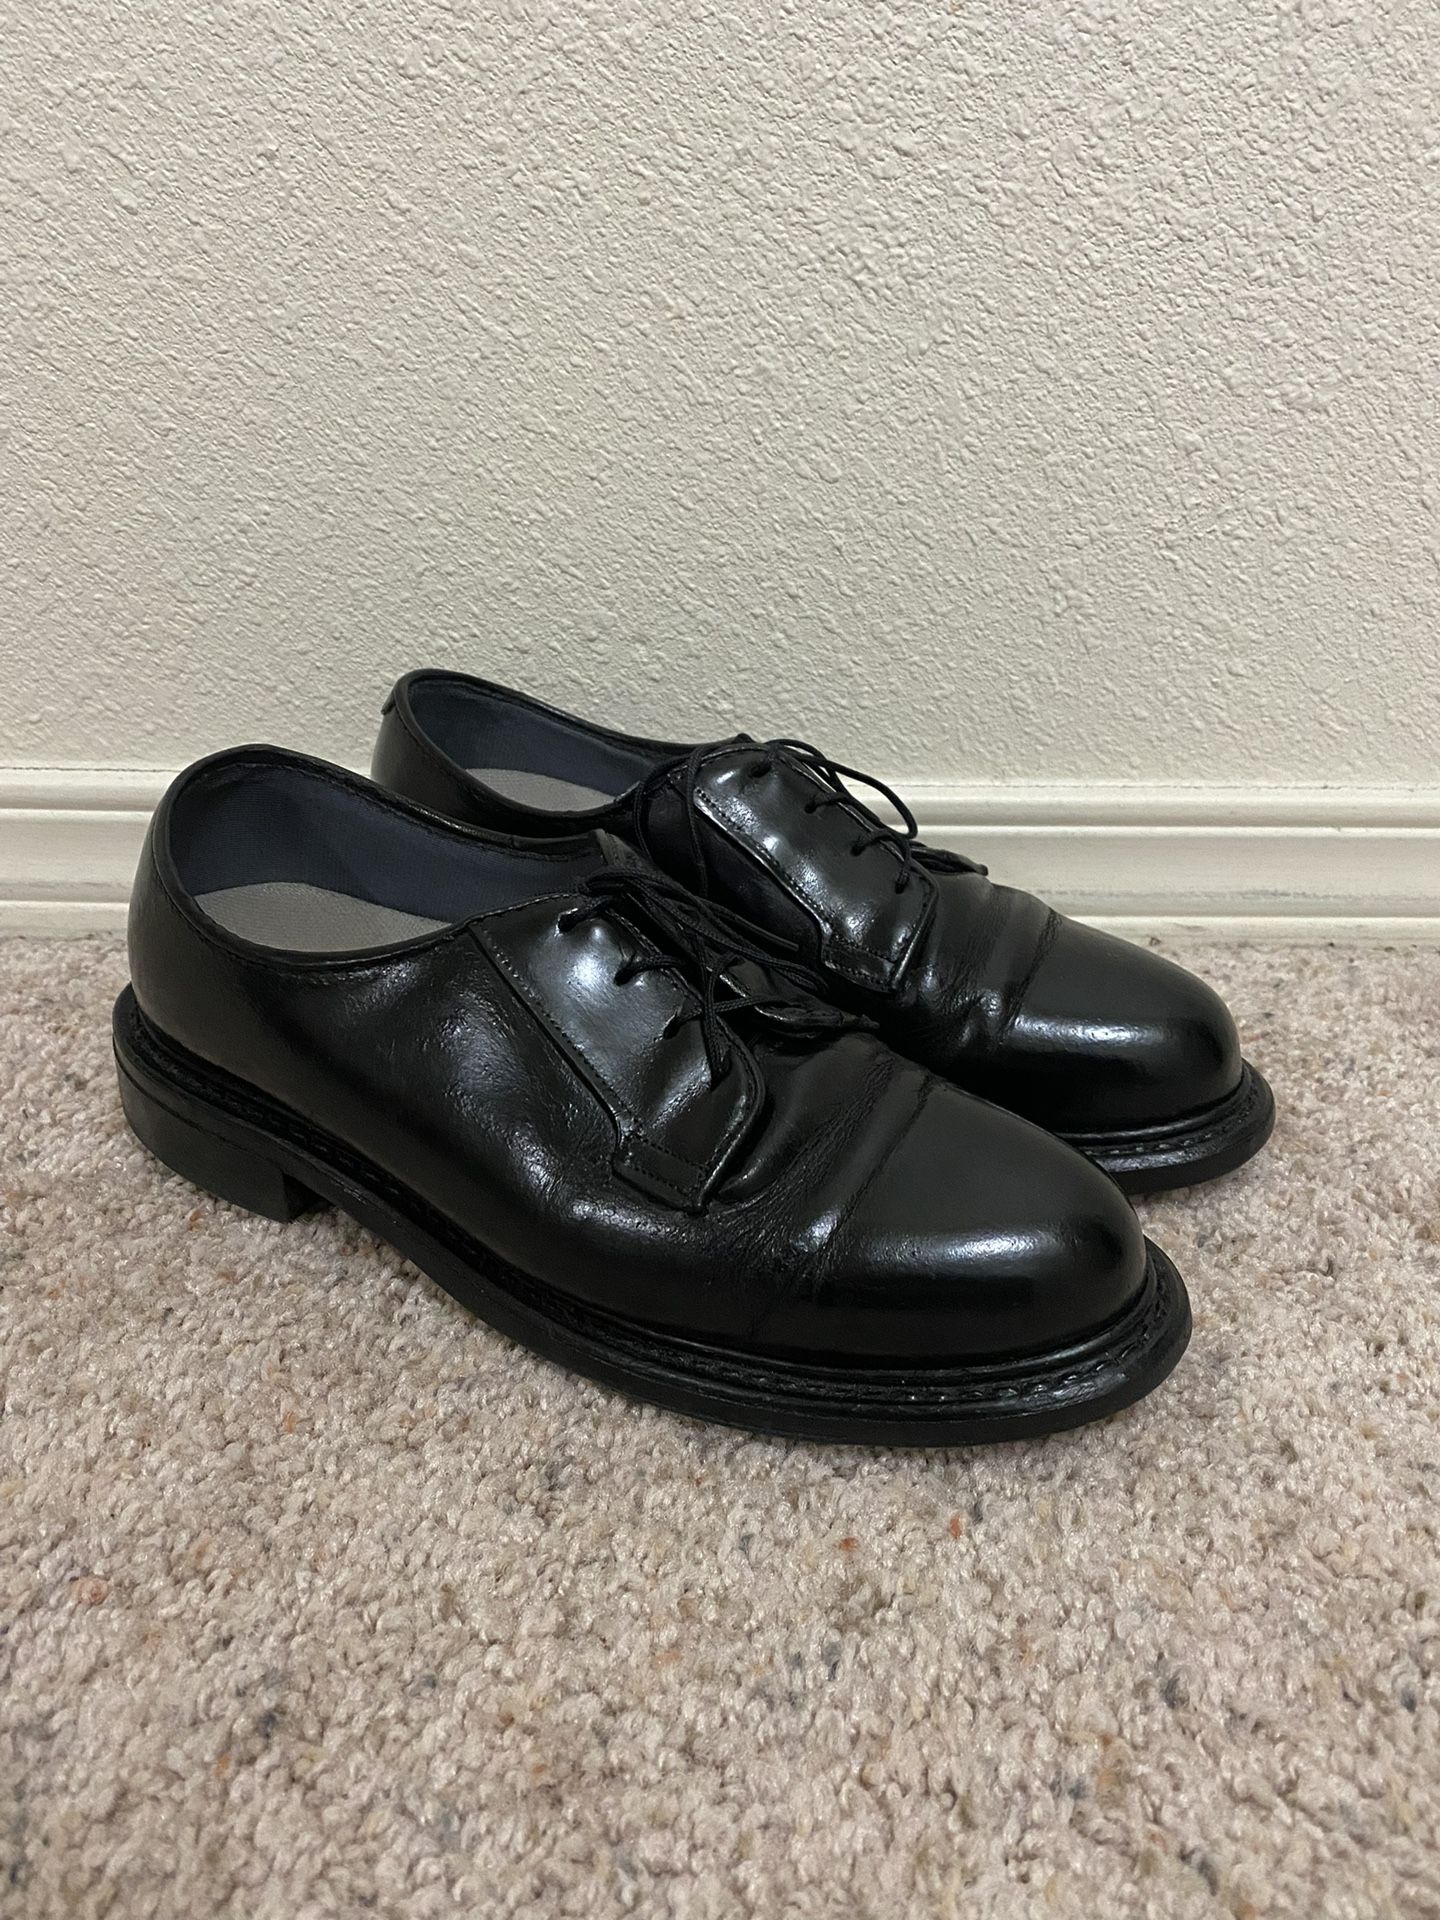 Black Military Dress Shoes